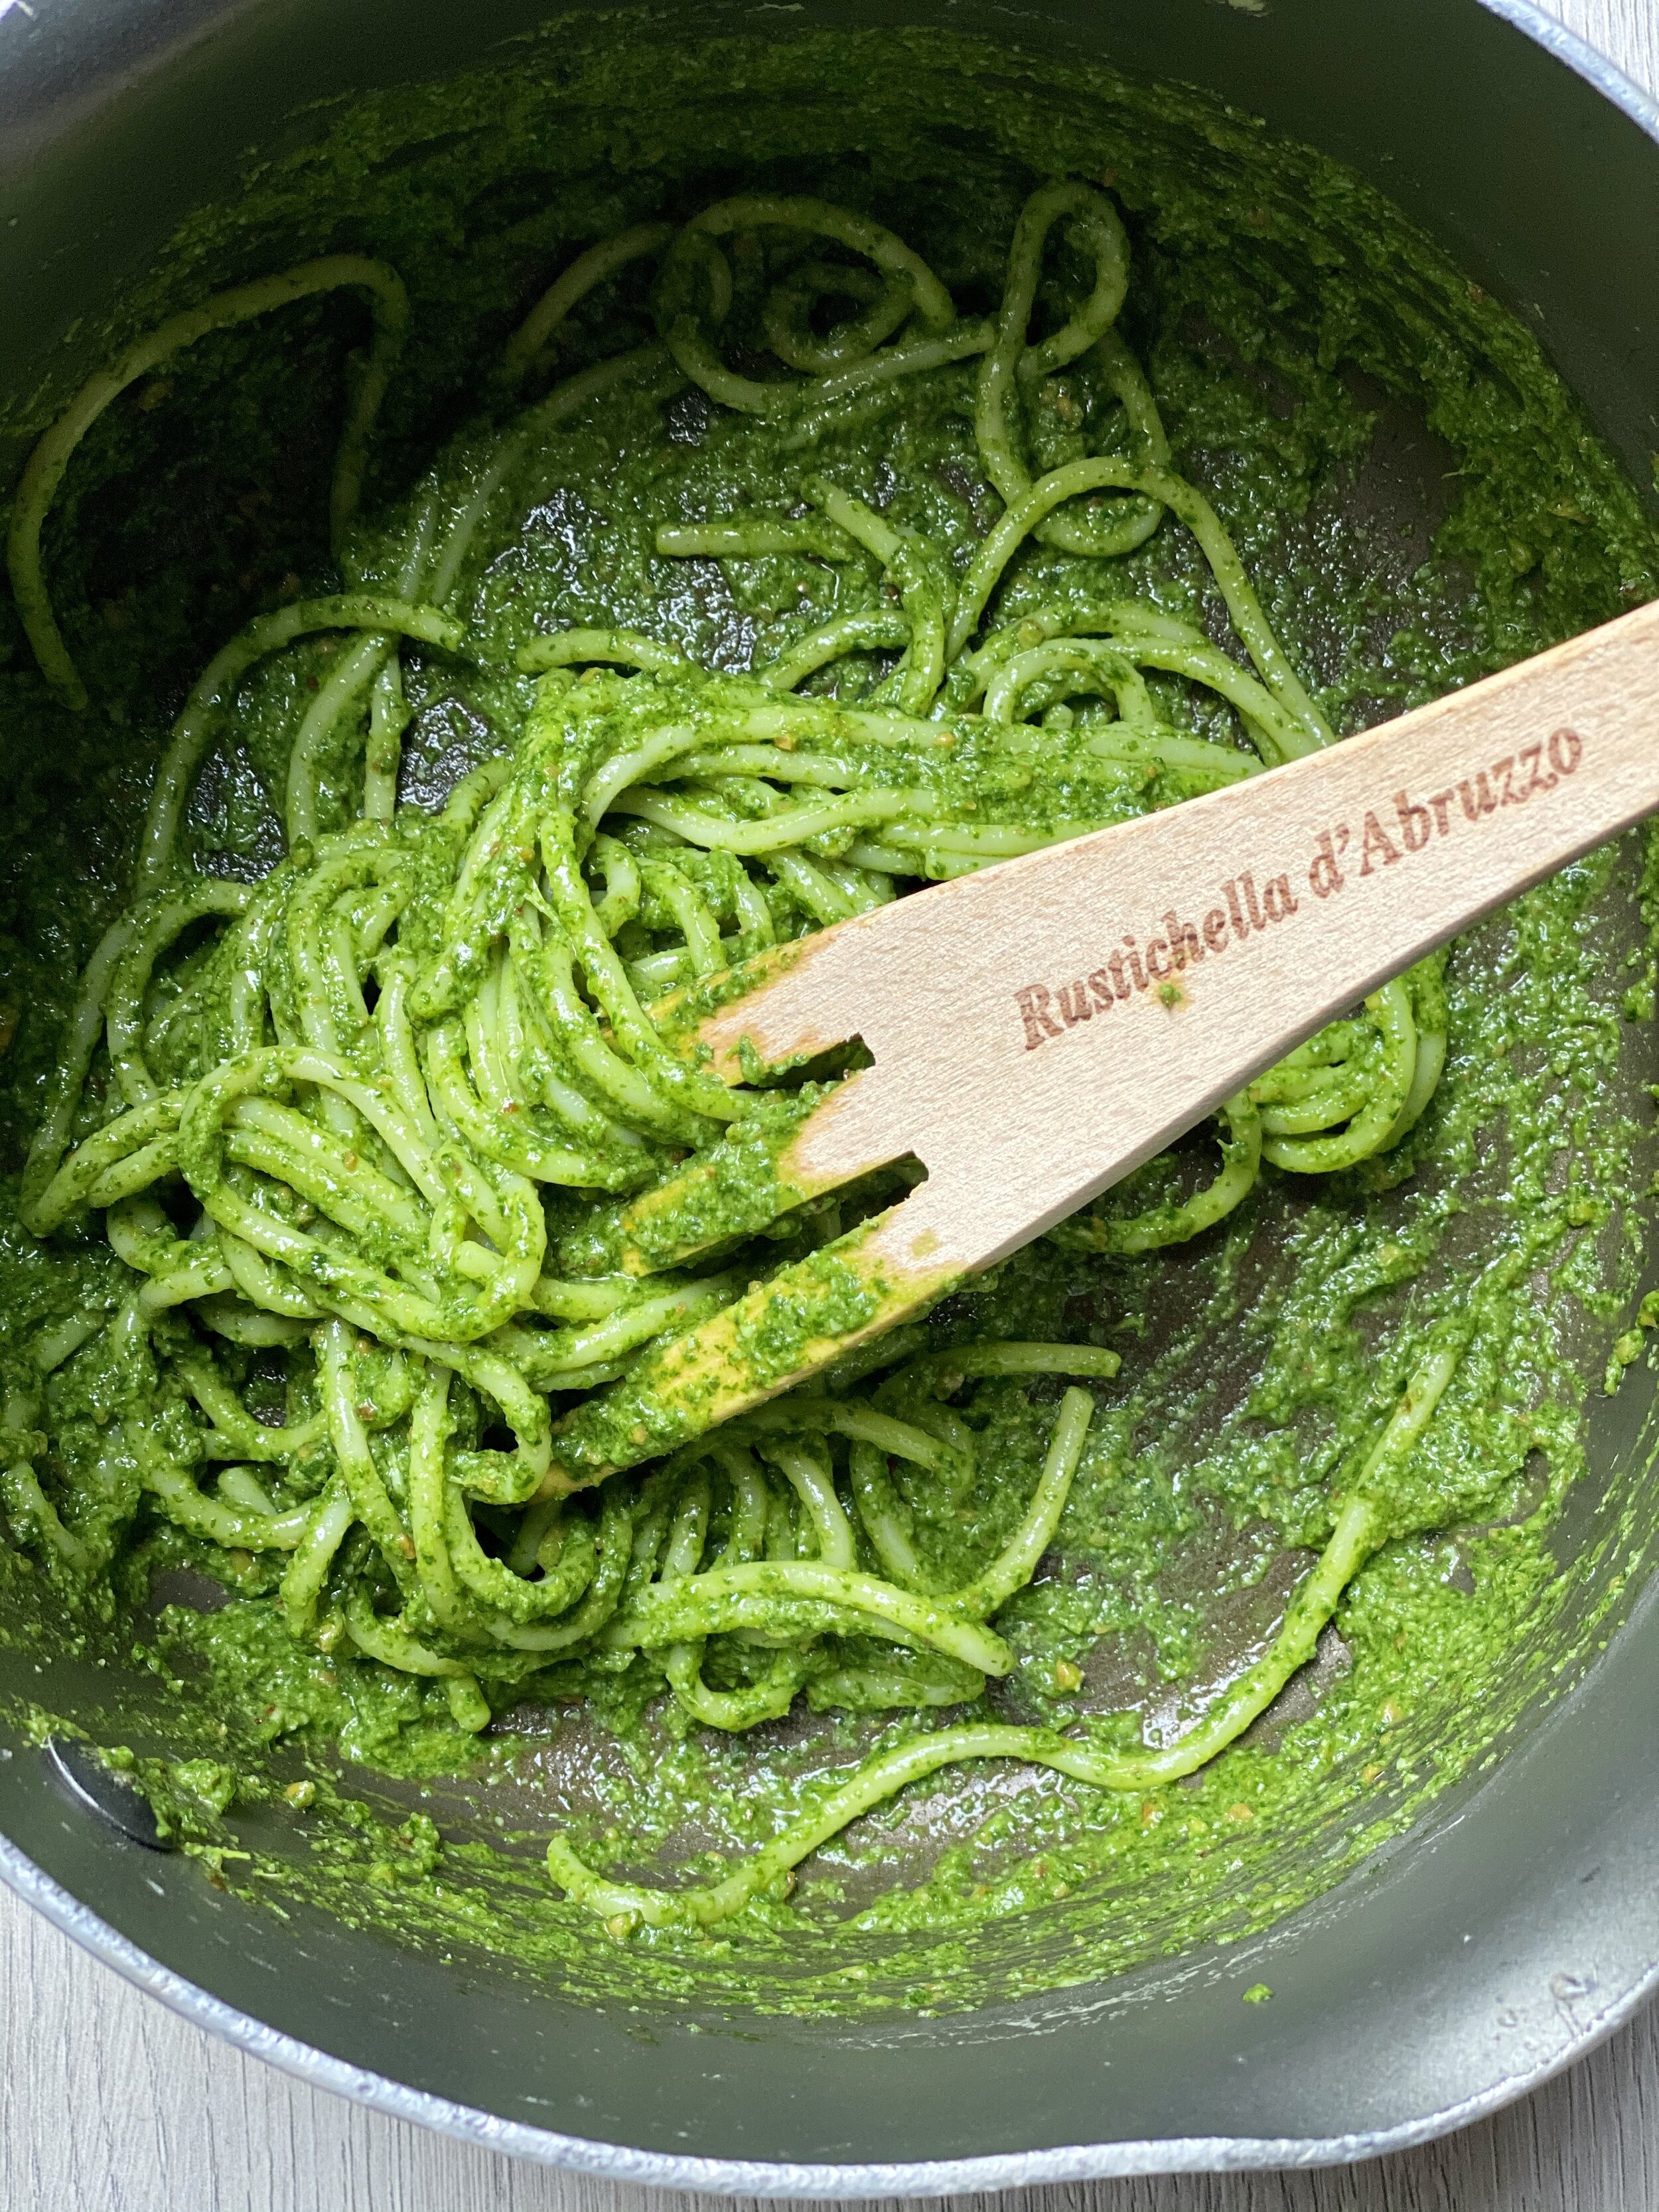 An empty pot of Watercressto spaghetti